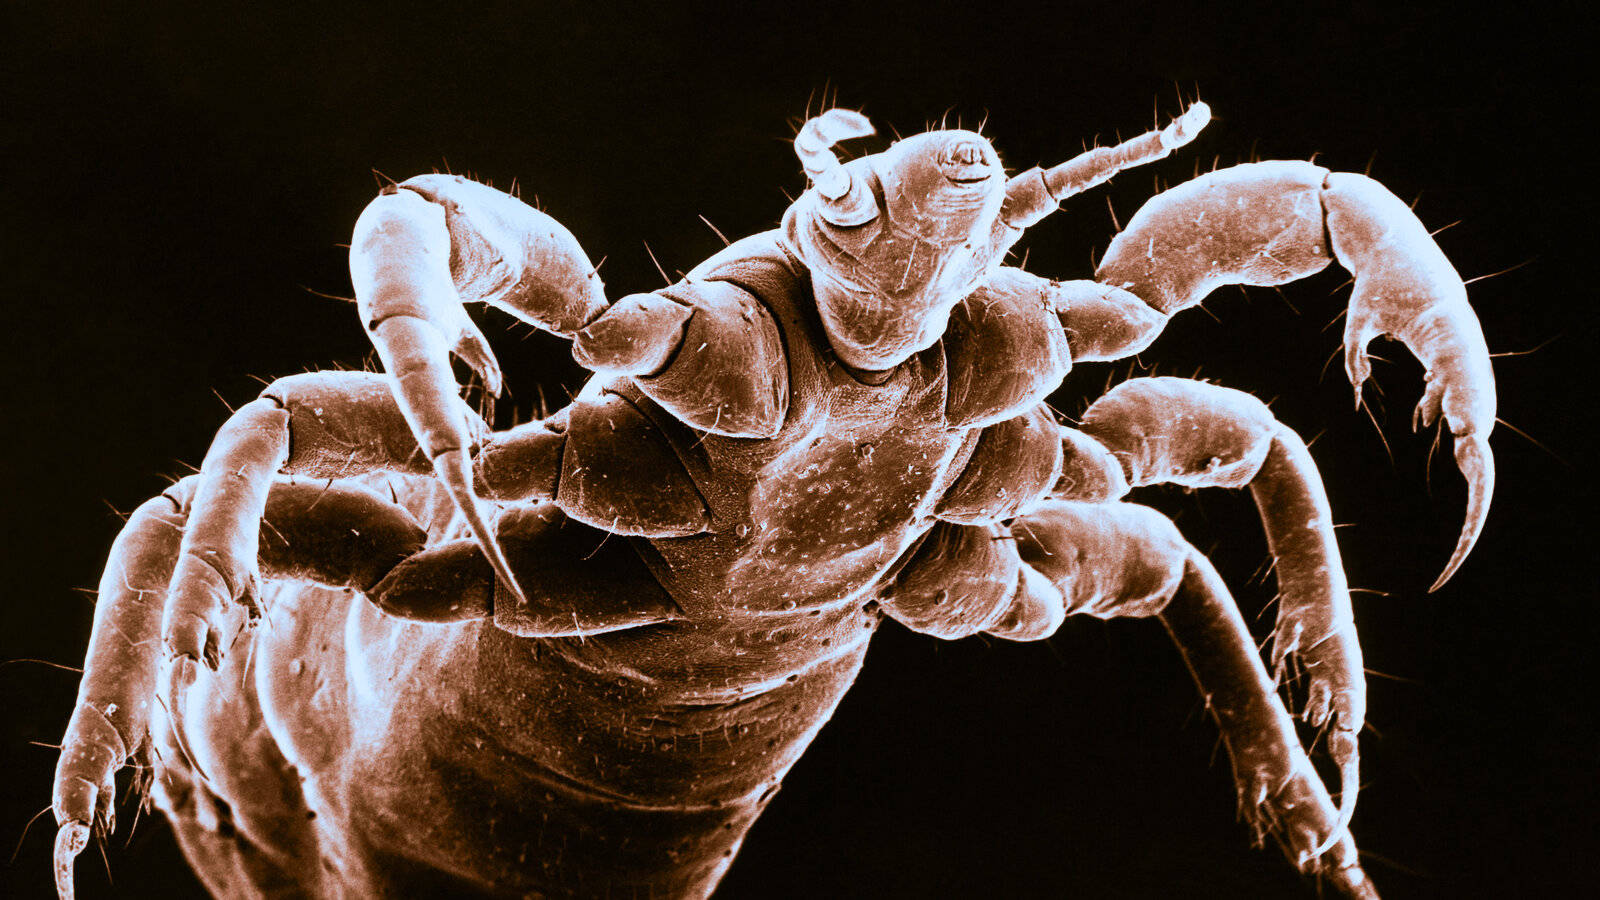 Crawling body louse close-up image Wallpaper